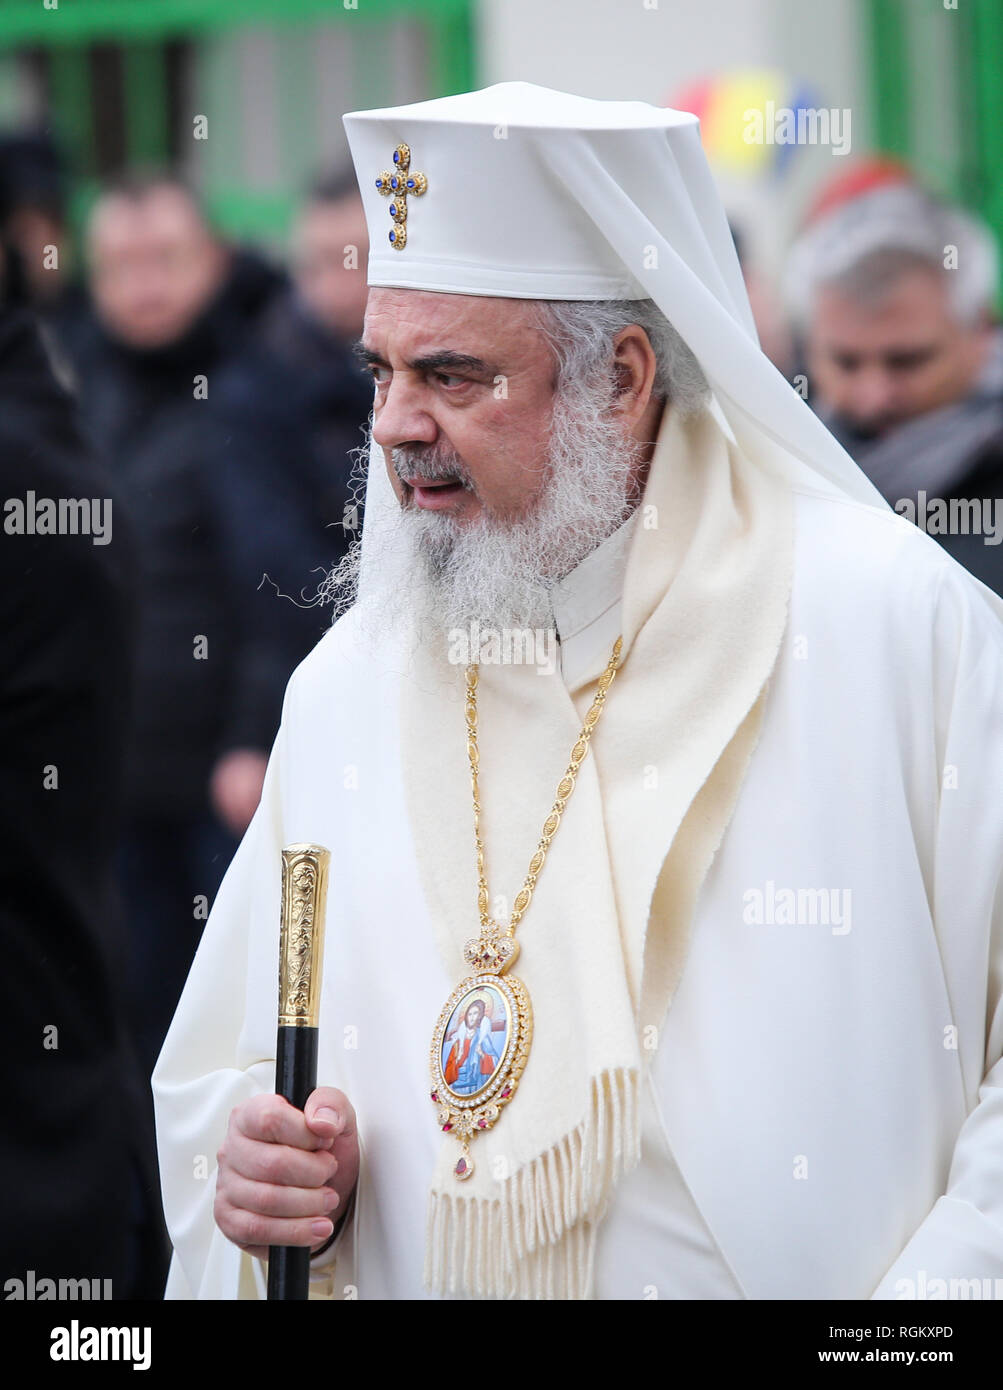 Bucharest, Romania - January 24, 2019: Romanian Orthodox Patriarch Daniel takes part at a celebration of the Union of the Principalities of Moldavia a Stock Photo